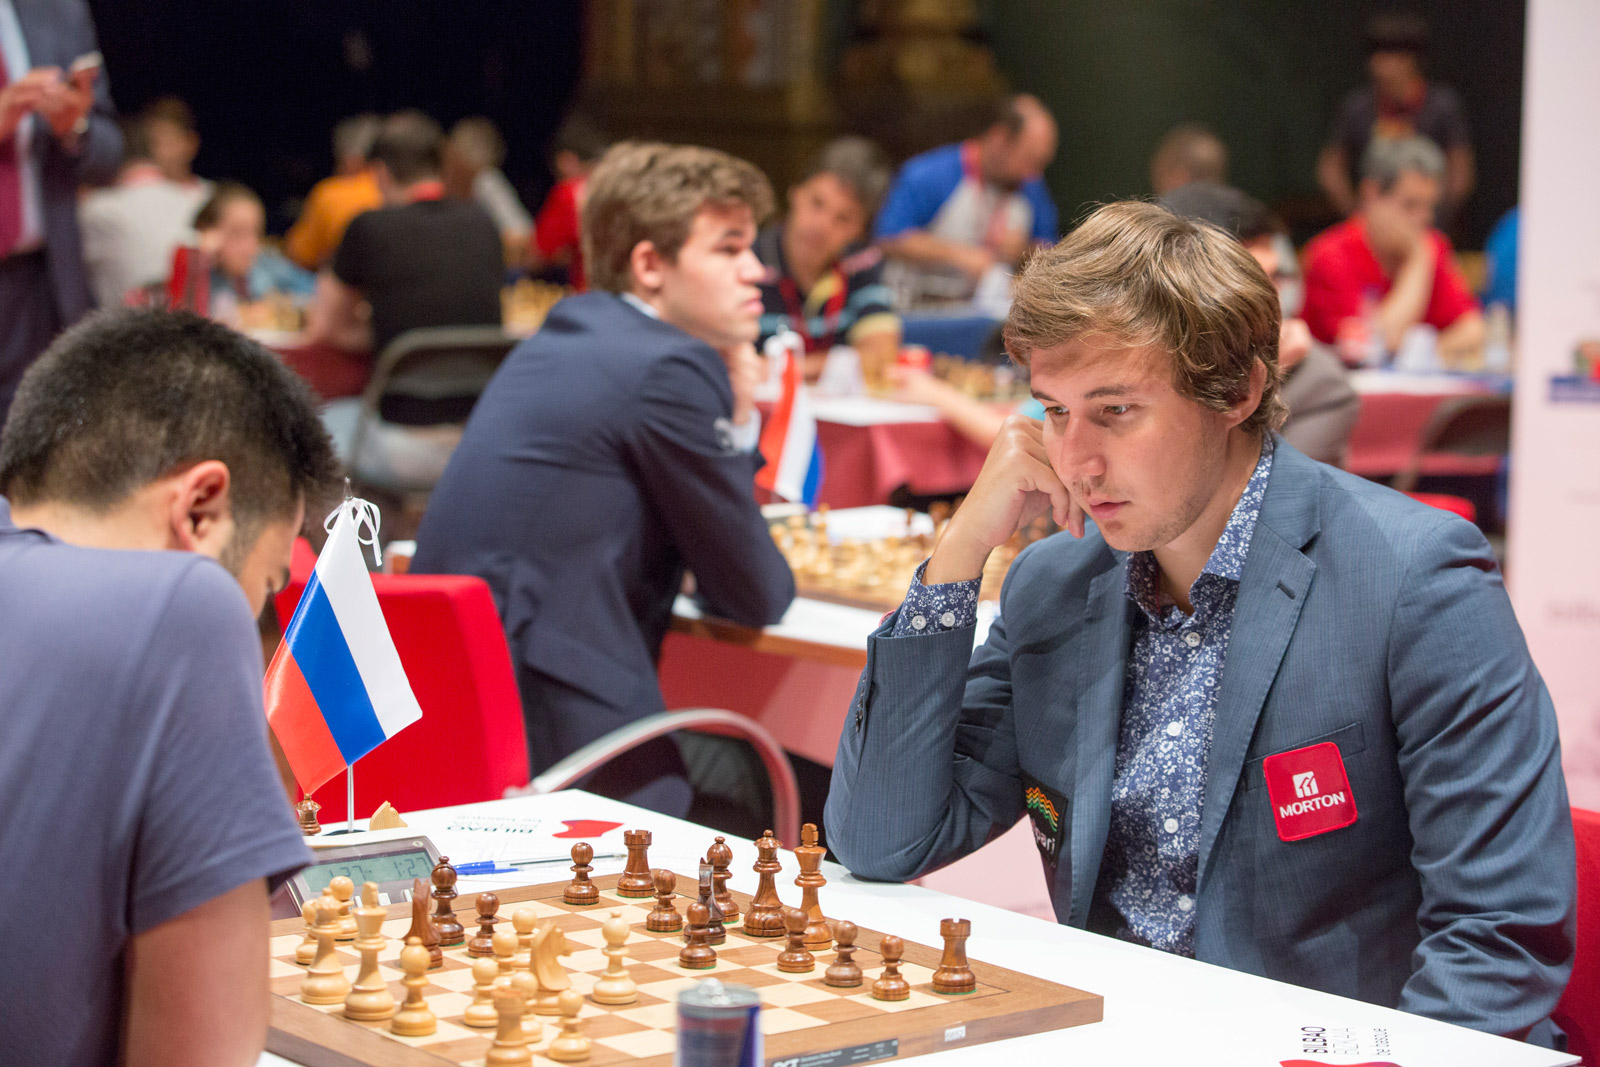 World Championship 2021 not the last for Carlsen, says Judit Polgar -  Sportstar